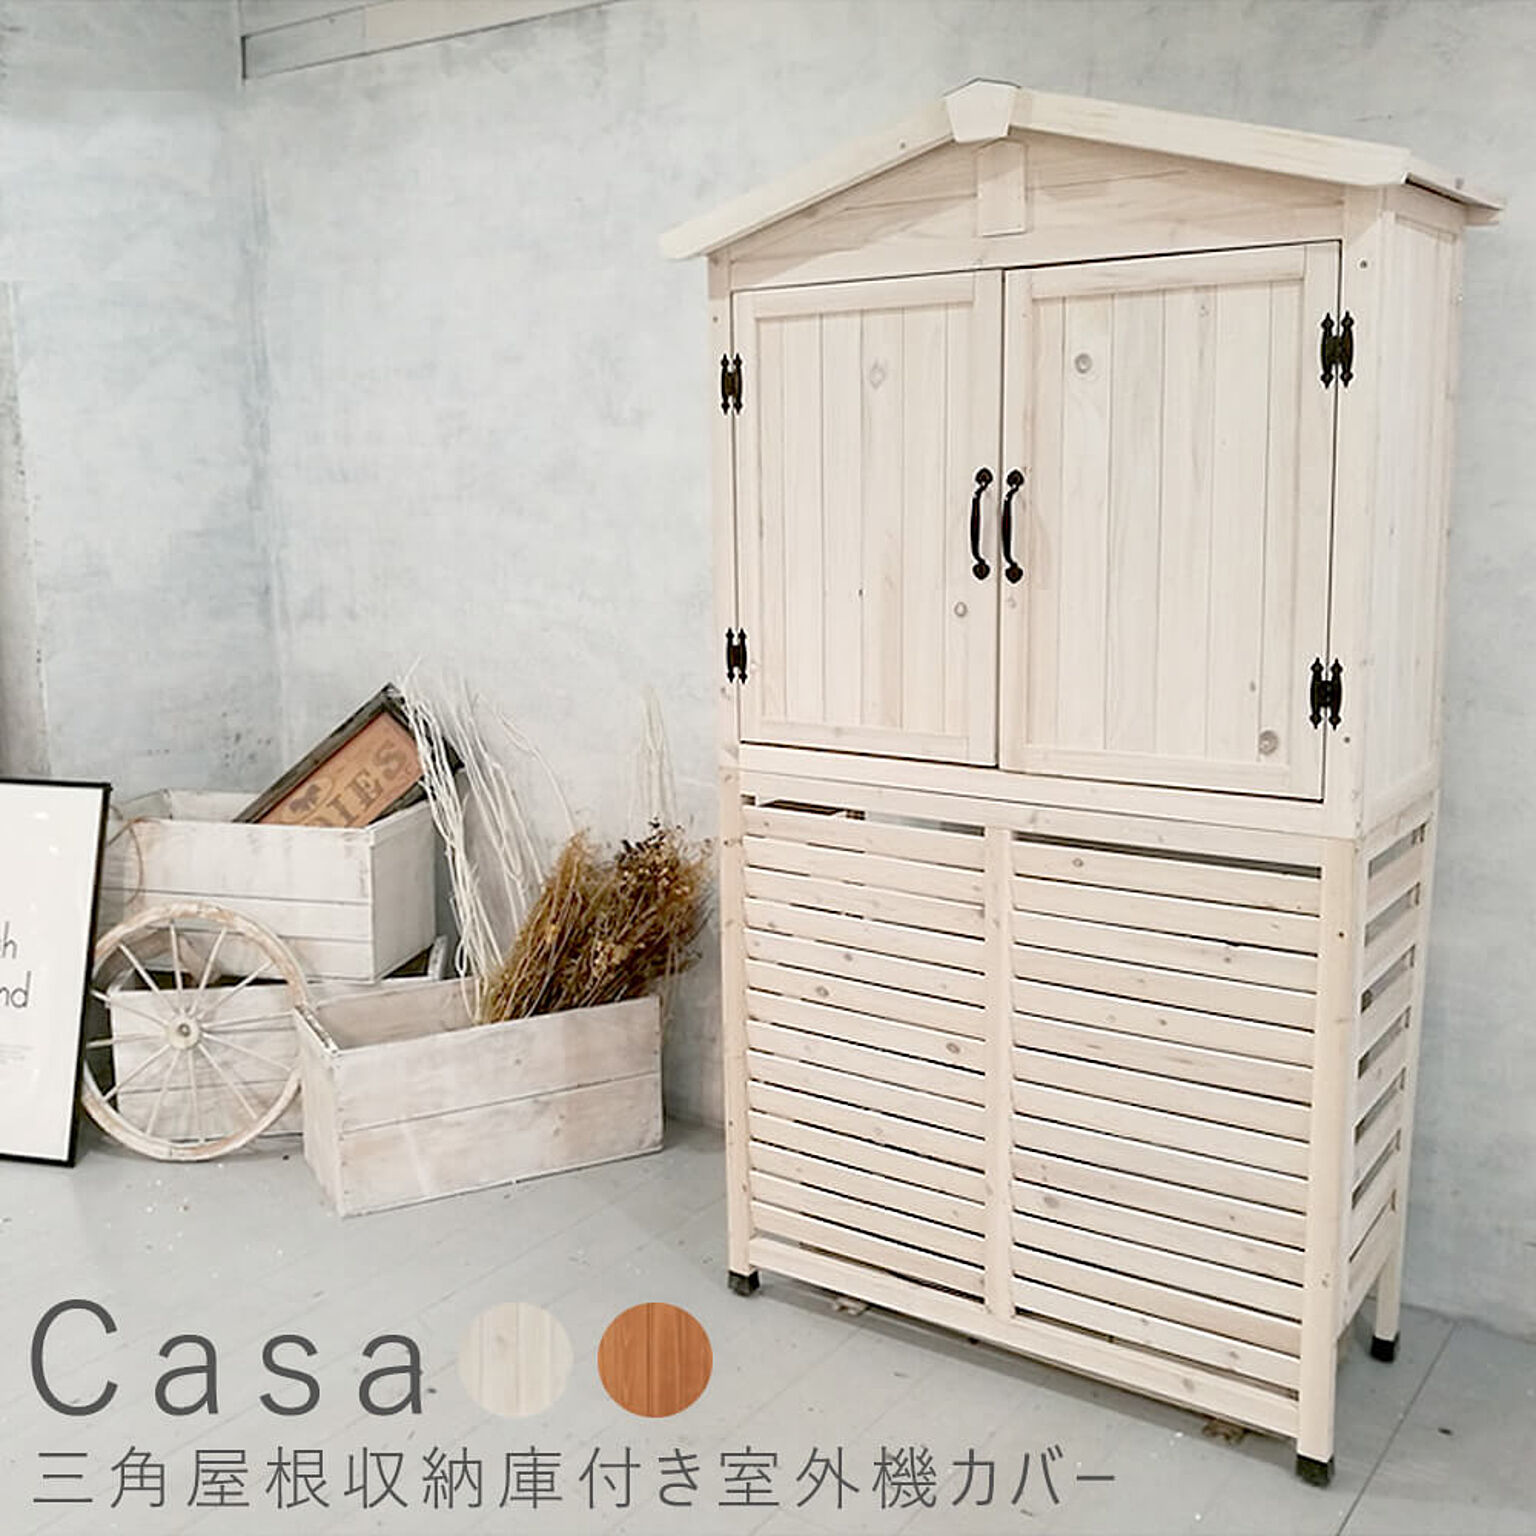 Casa（カーサ） 三角屋根収納付室外機カバー m10816